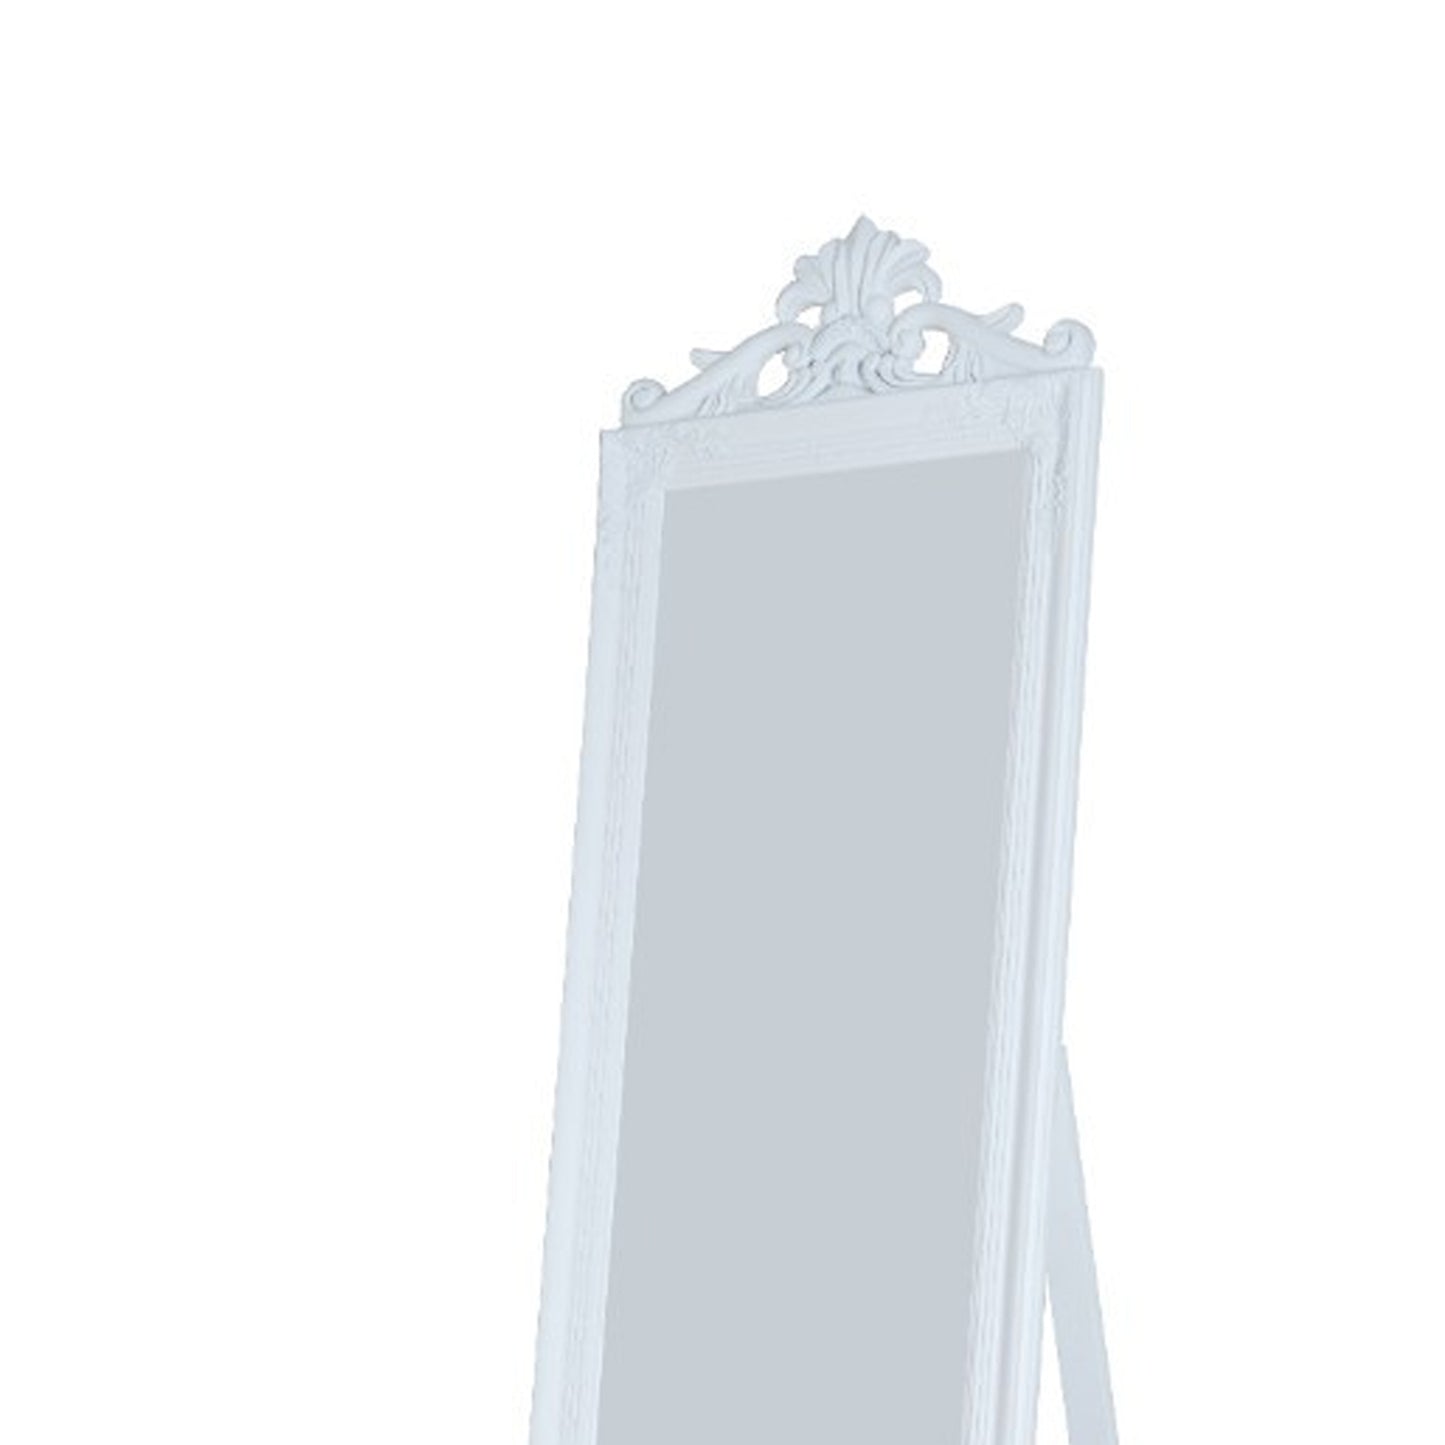 Elegance Reflections Full Length Standing Mirror - White